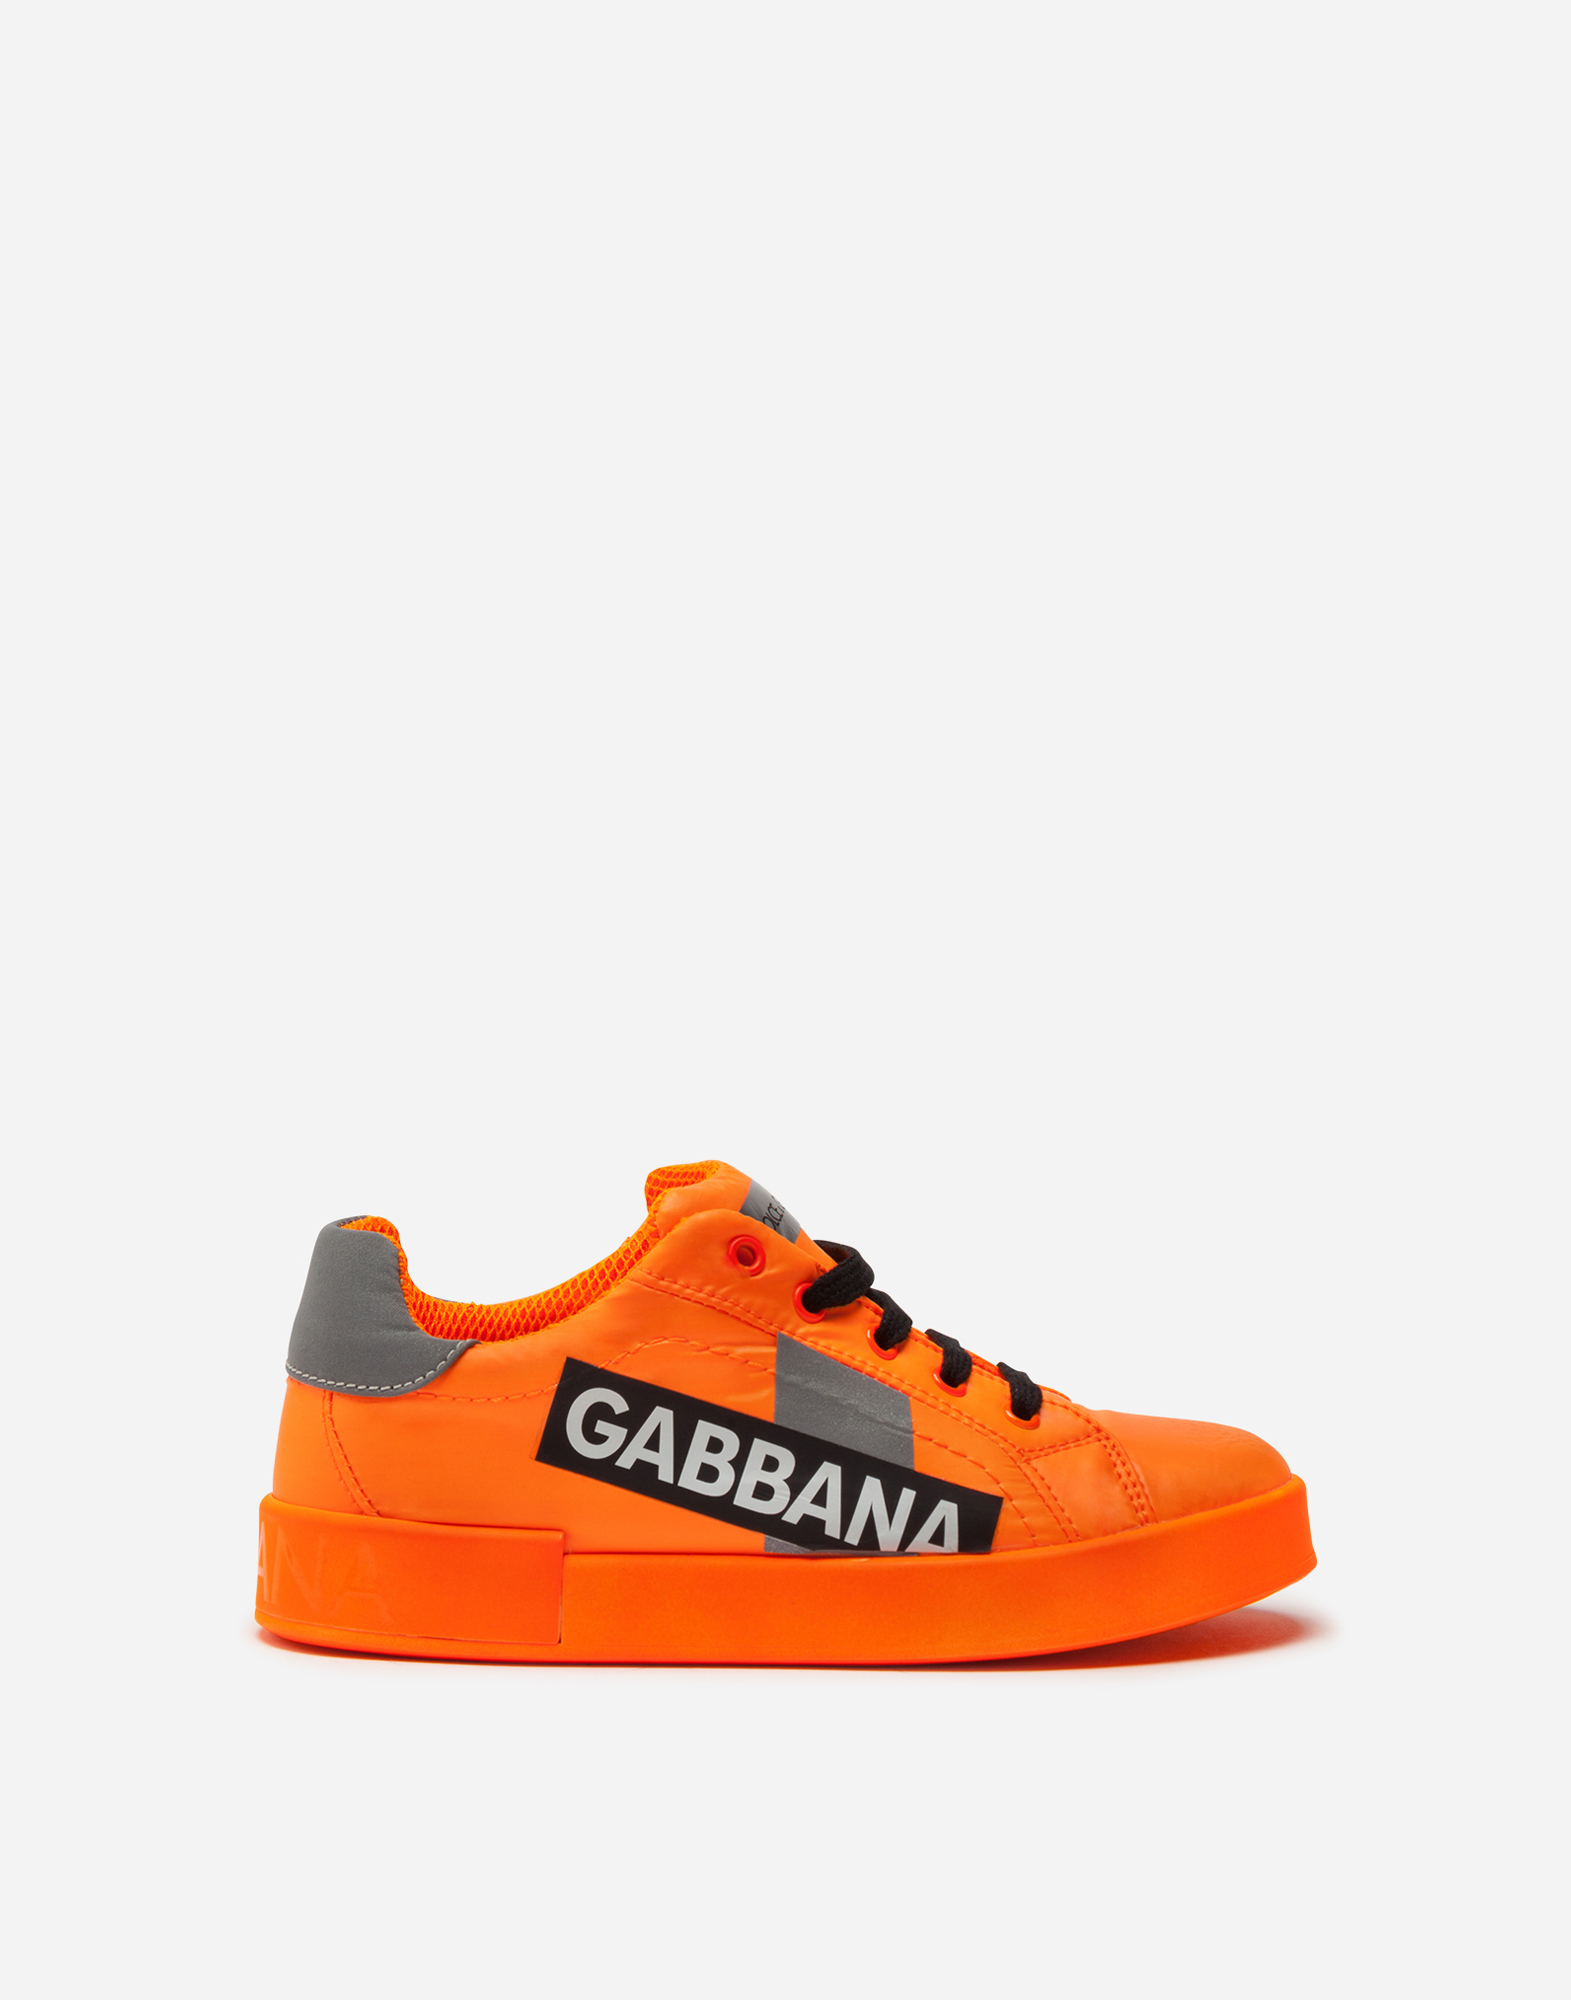 dolce gabbana customized sneakers